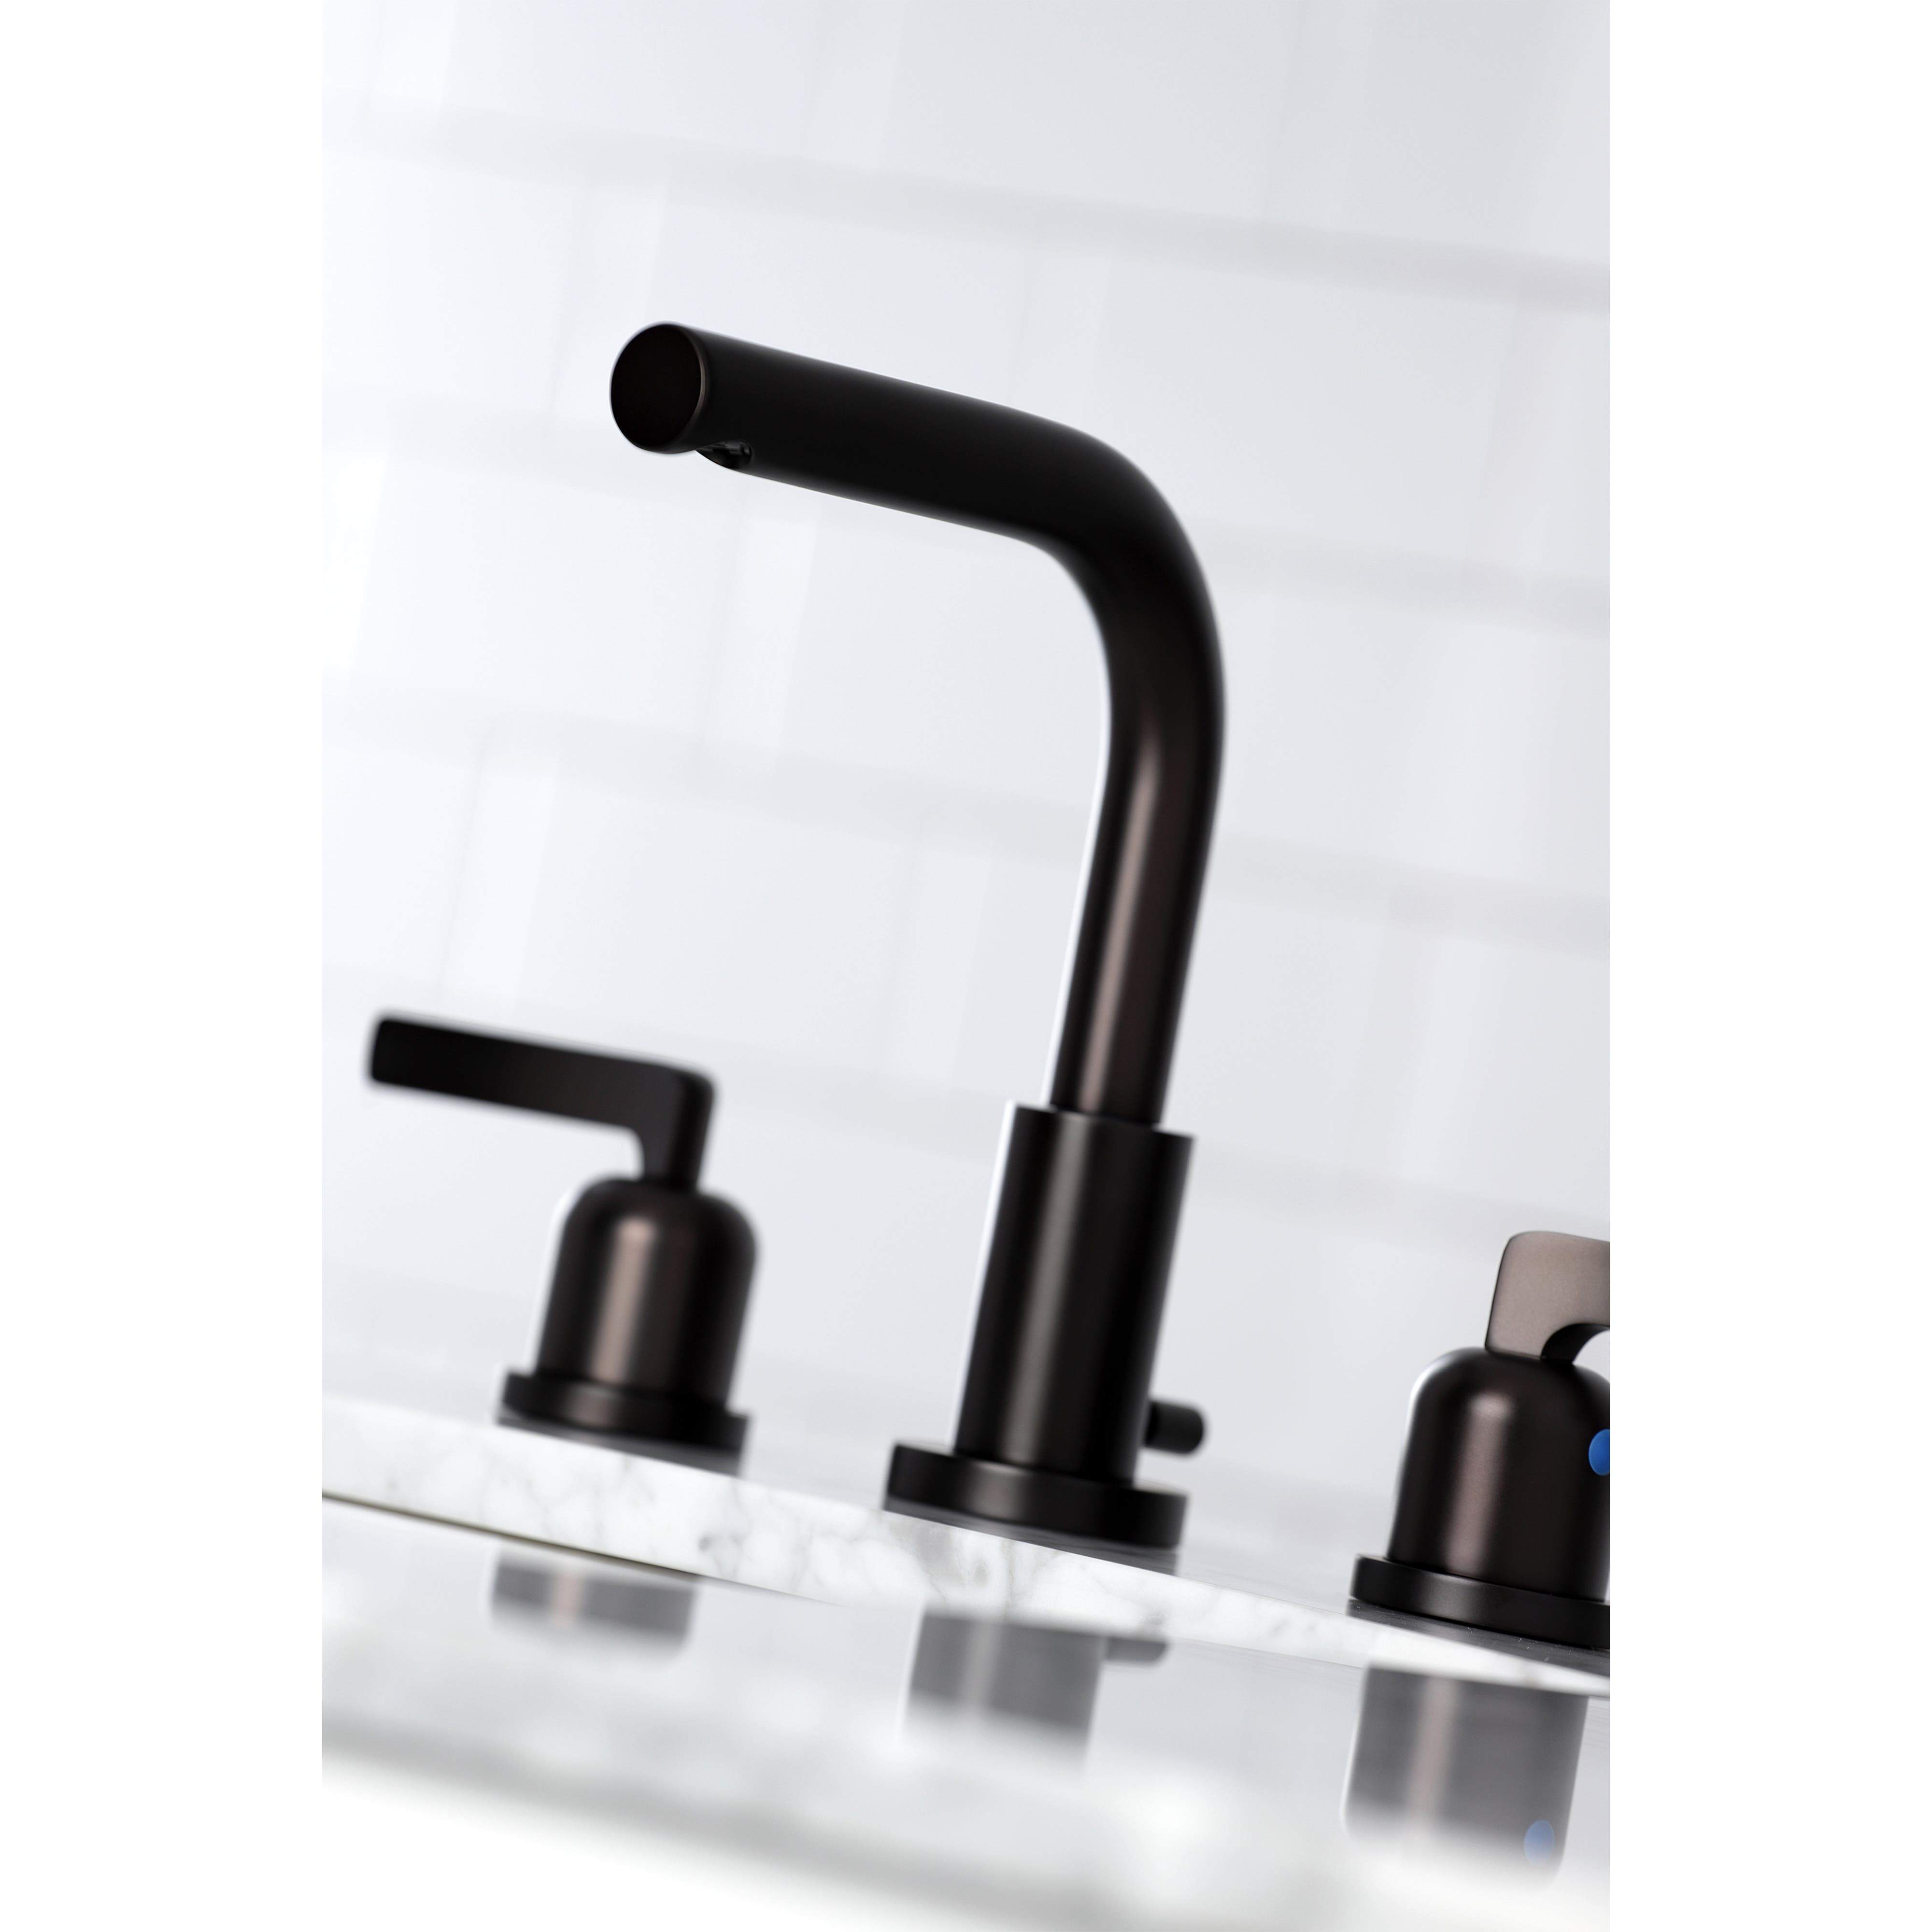 Kingston Brass Fauceture FSC895XEFL-P 8 in. Widespread Bathroom Faucet